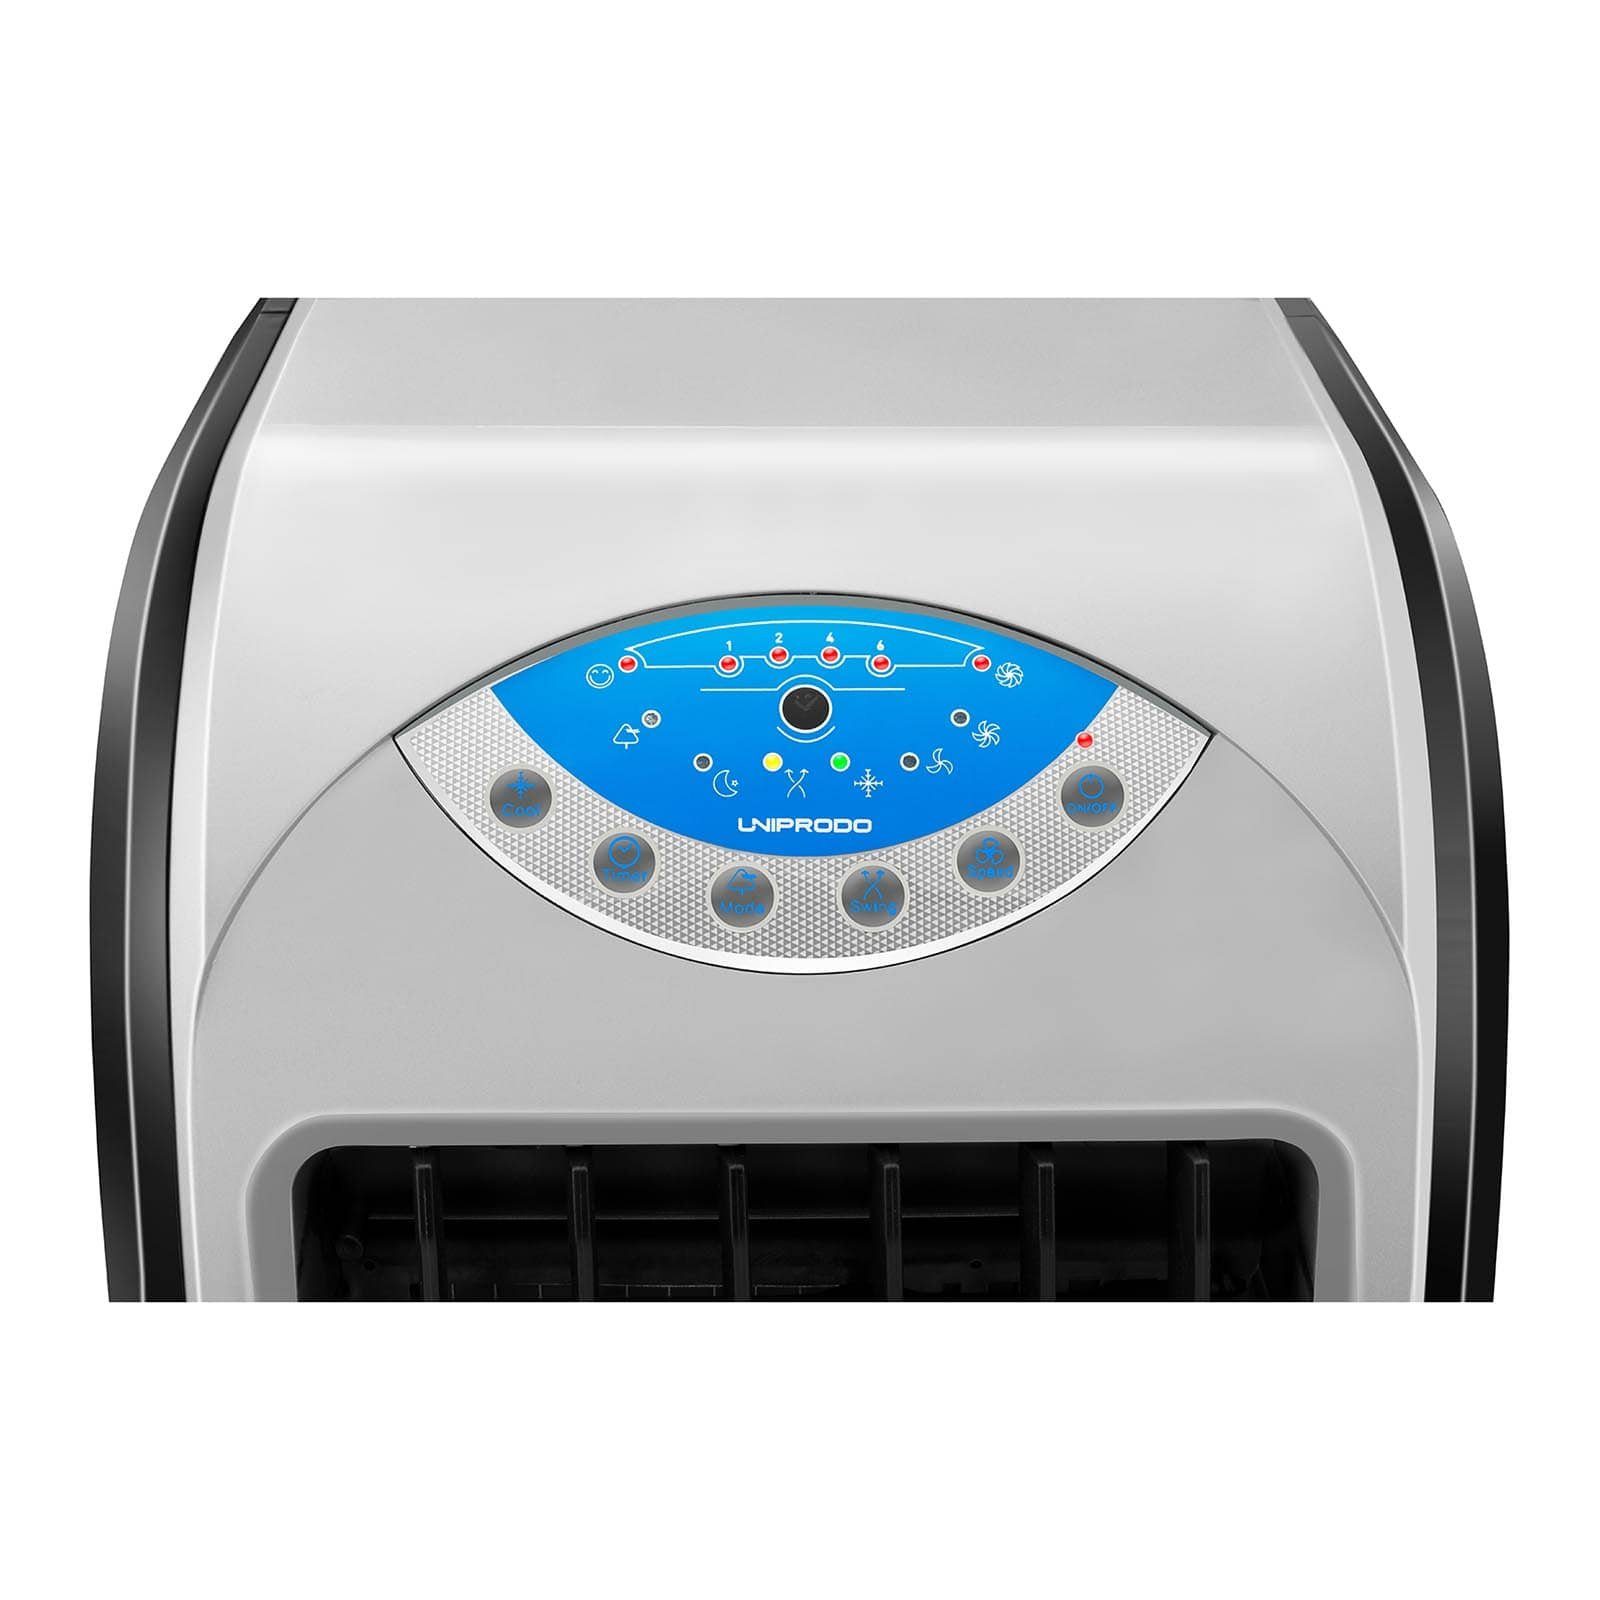 Uniprodo Ventilatorkombigerät Luftkühler mobil mit in Wassertank - L Heizfunktion - 6 4 1